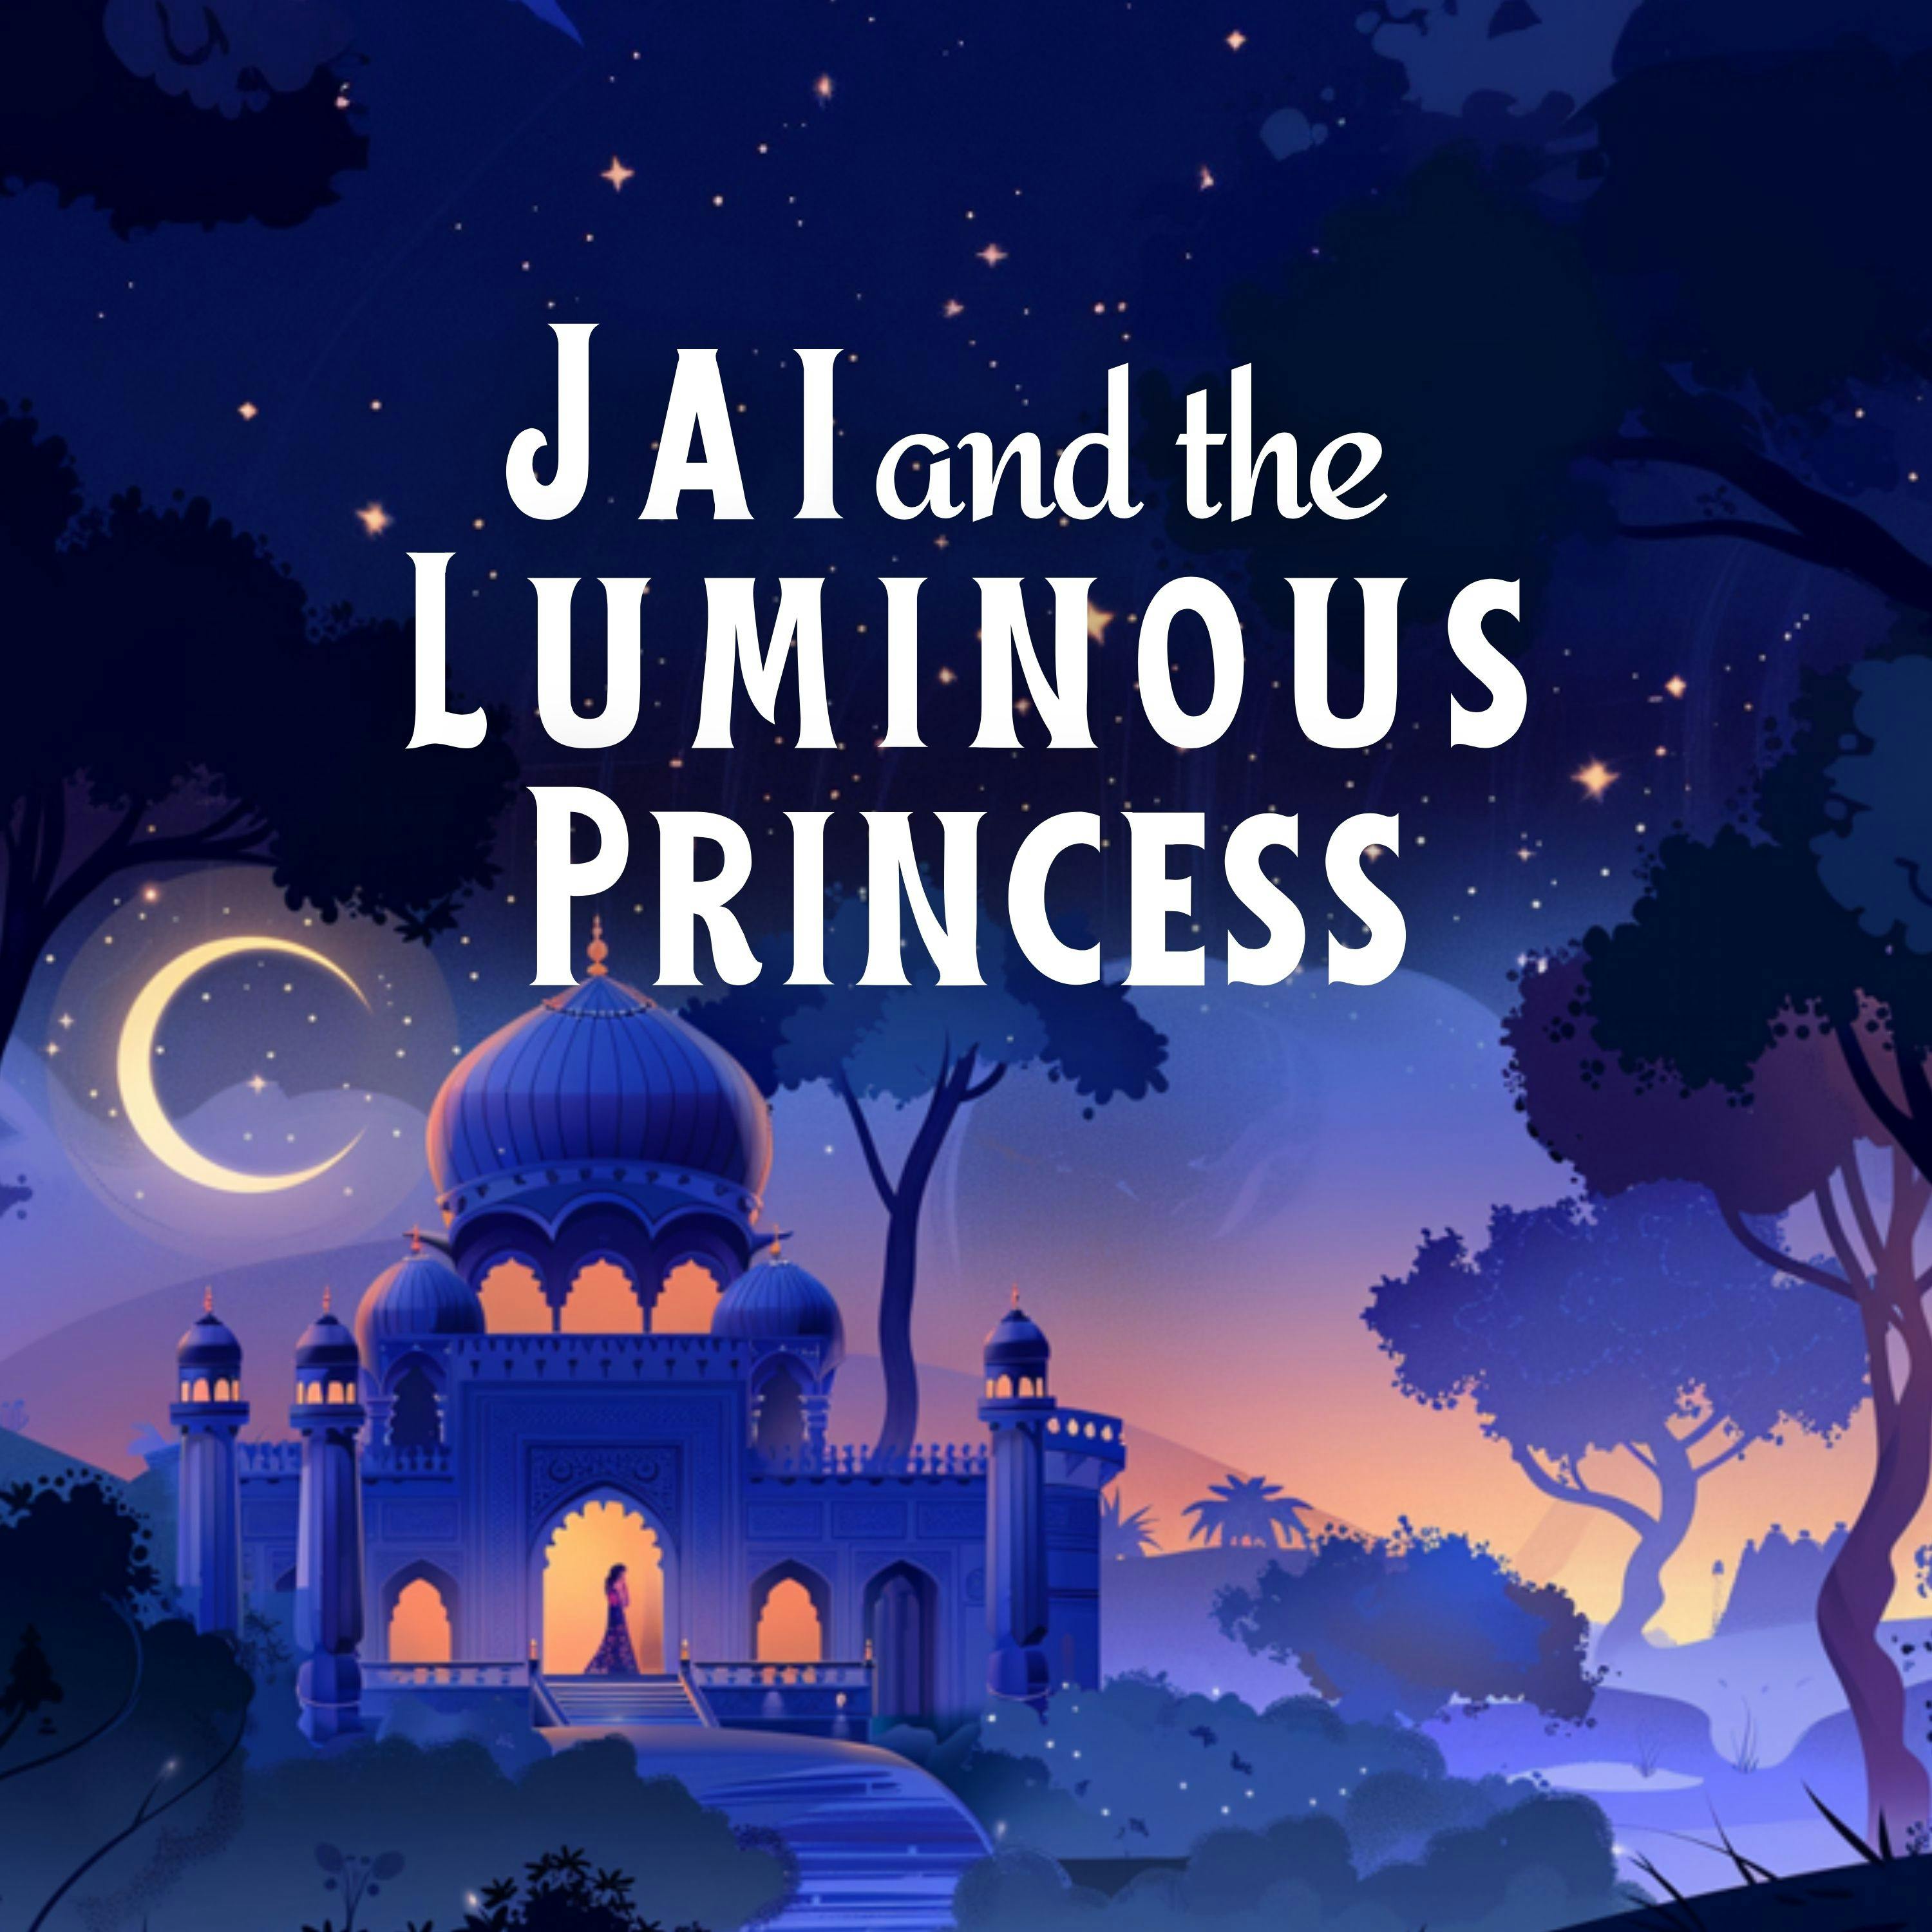 Jai and the Luminous Princess